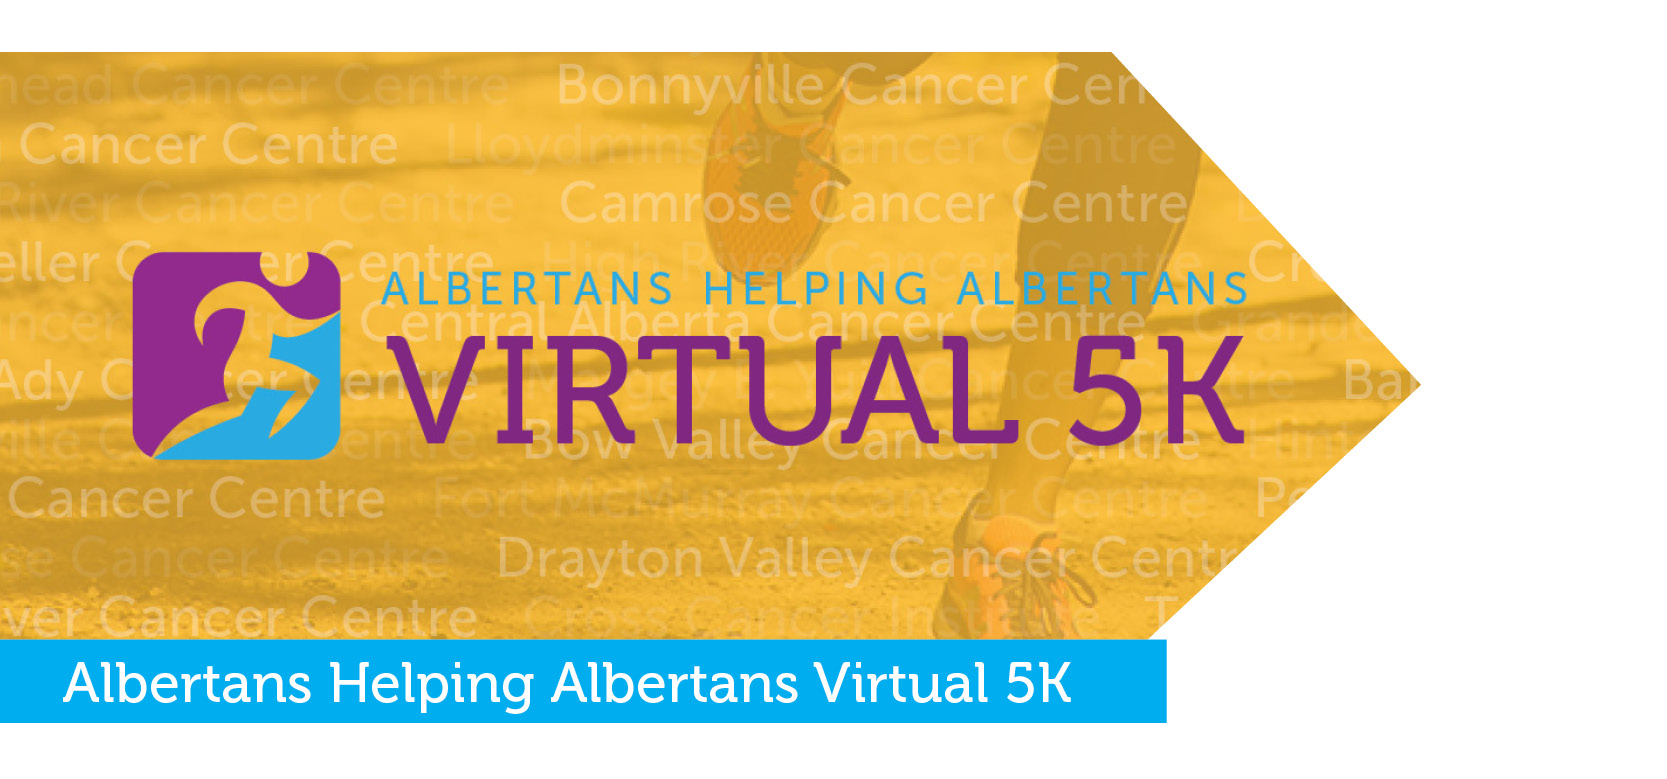  Albertans Helping Albertans Virtual 5K